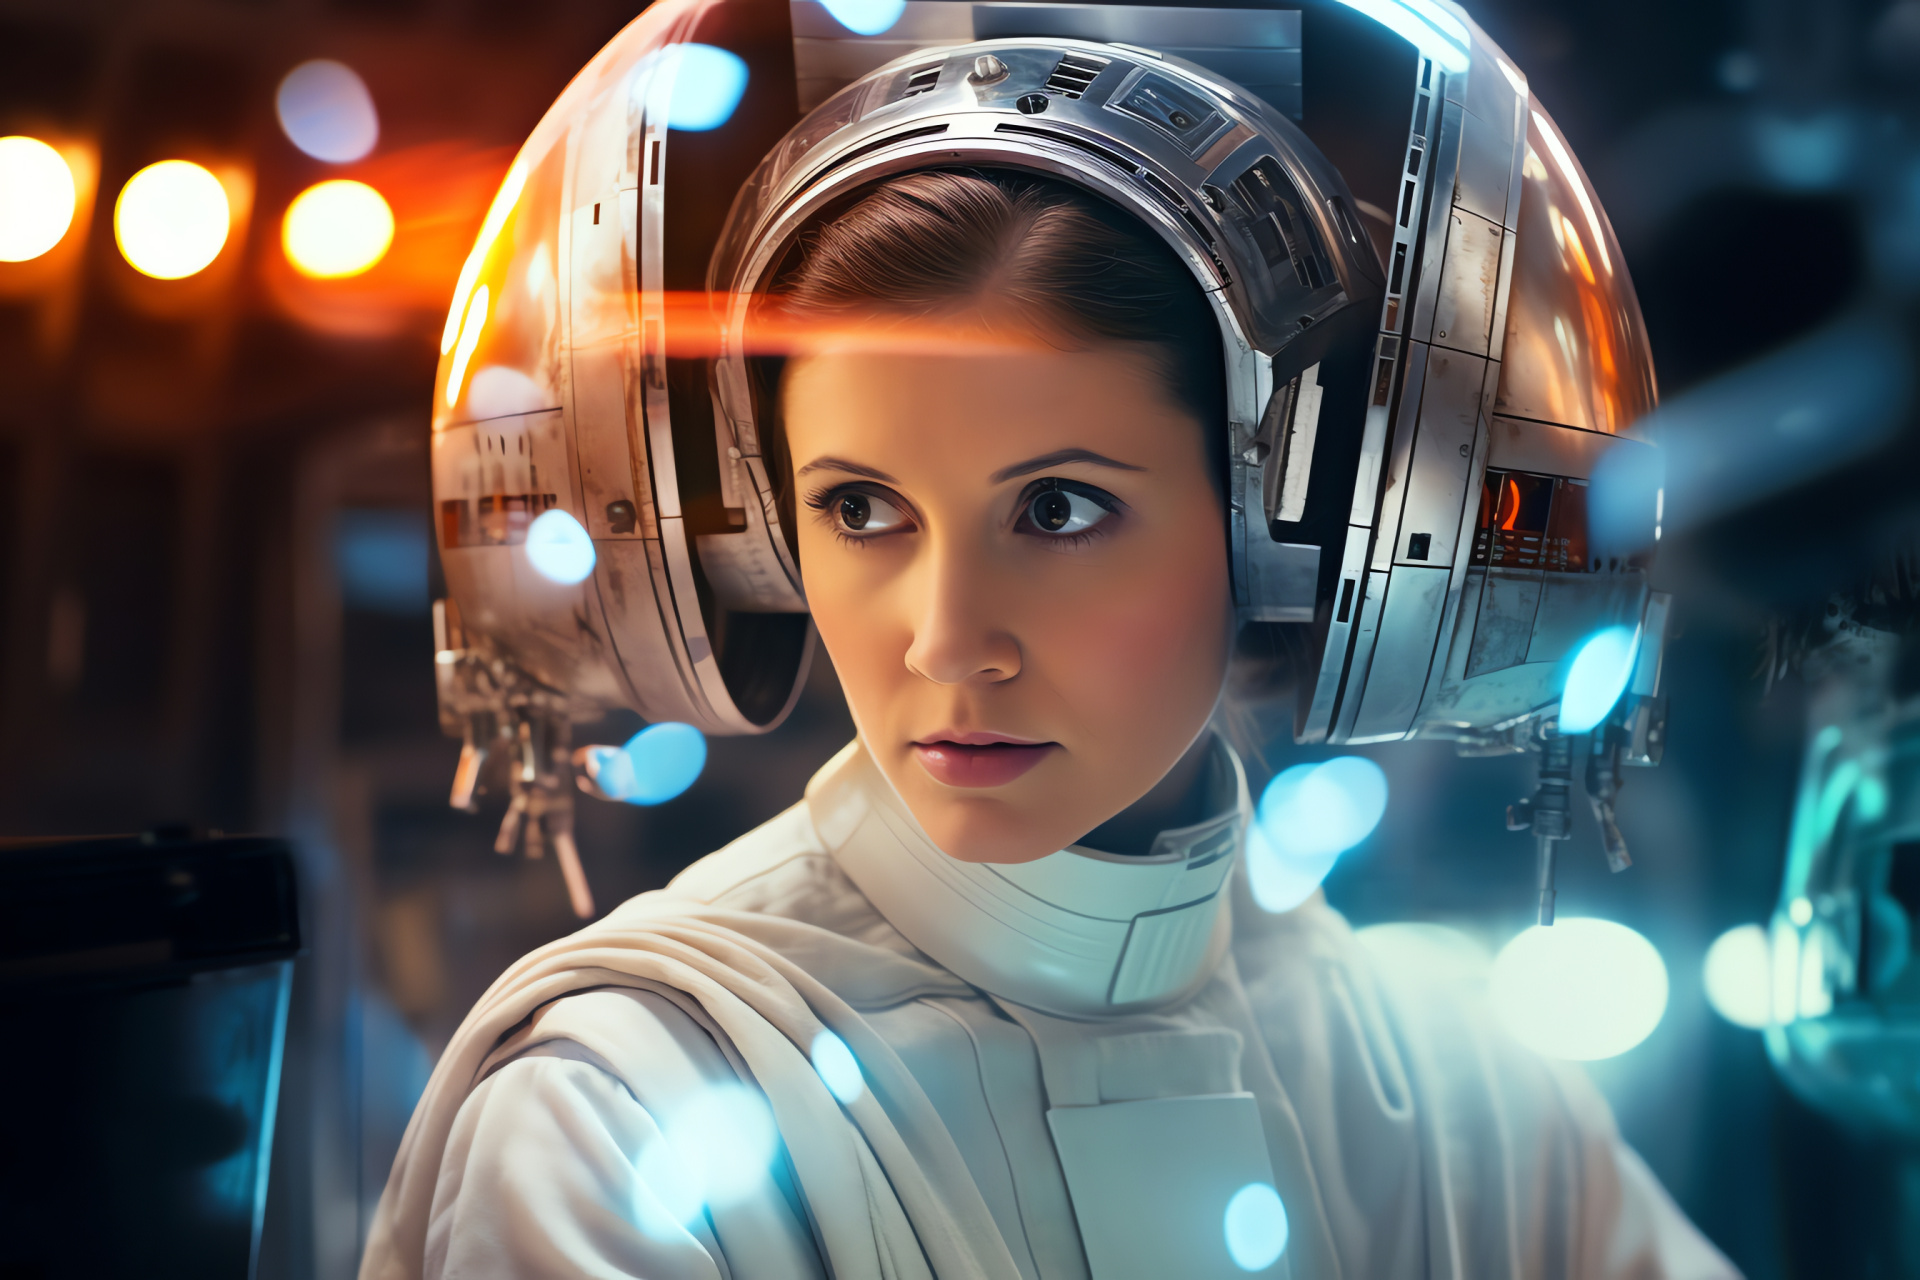 Princess Leia, Hairstyle, Holographic distress, A New Hope, Legendary Sci-Fi, HD Desktop Image